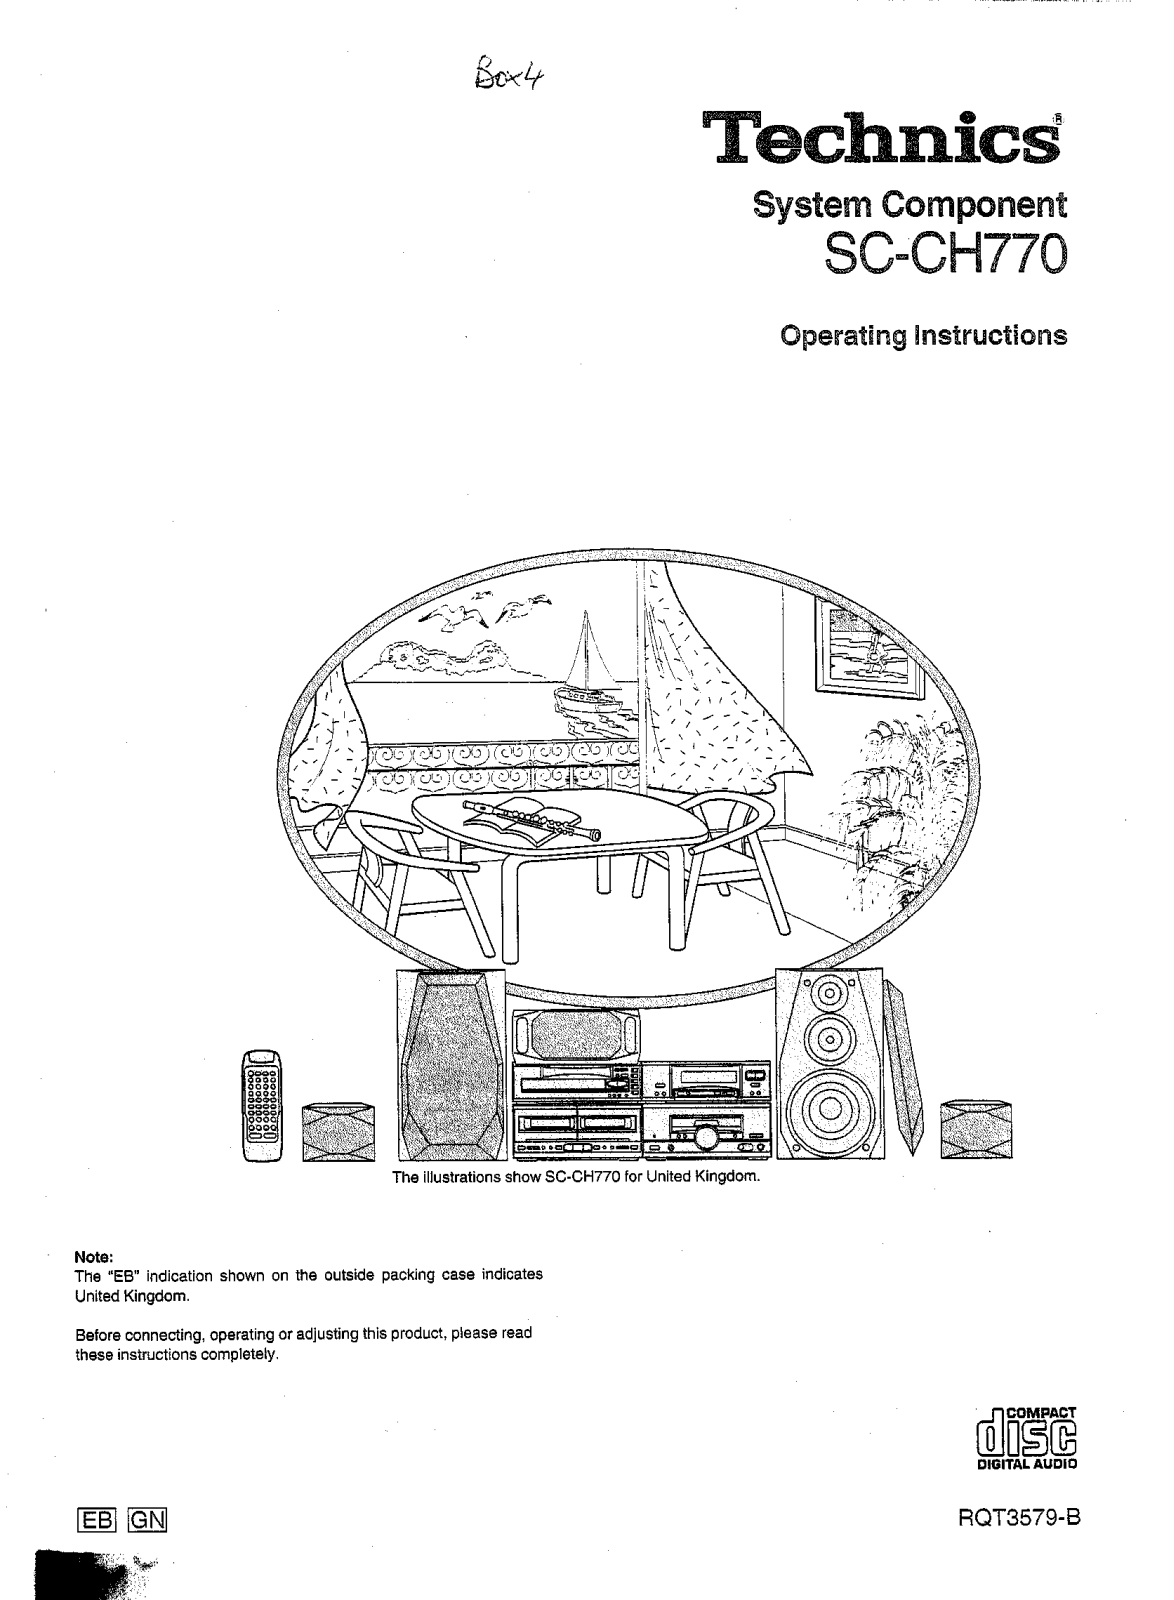 Technics SC-CH770 Operating Instruction